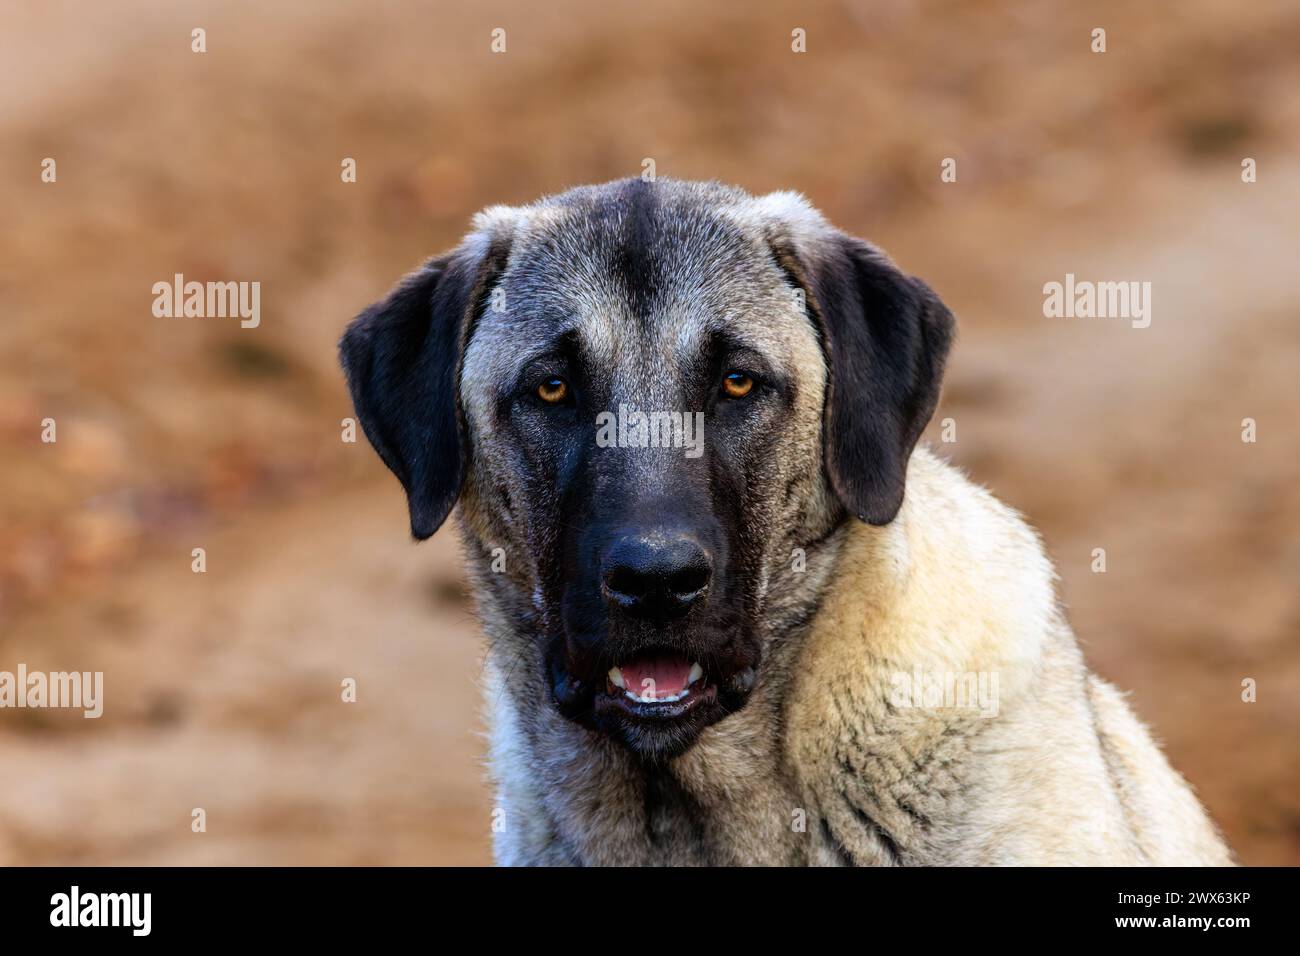 Beautiful close-up portrait of a young Kangal dog Stock Photo